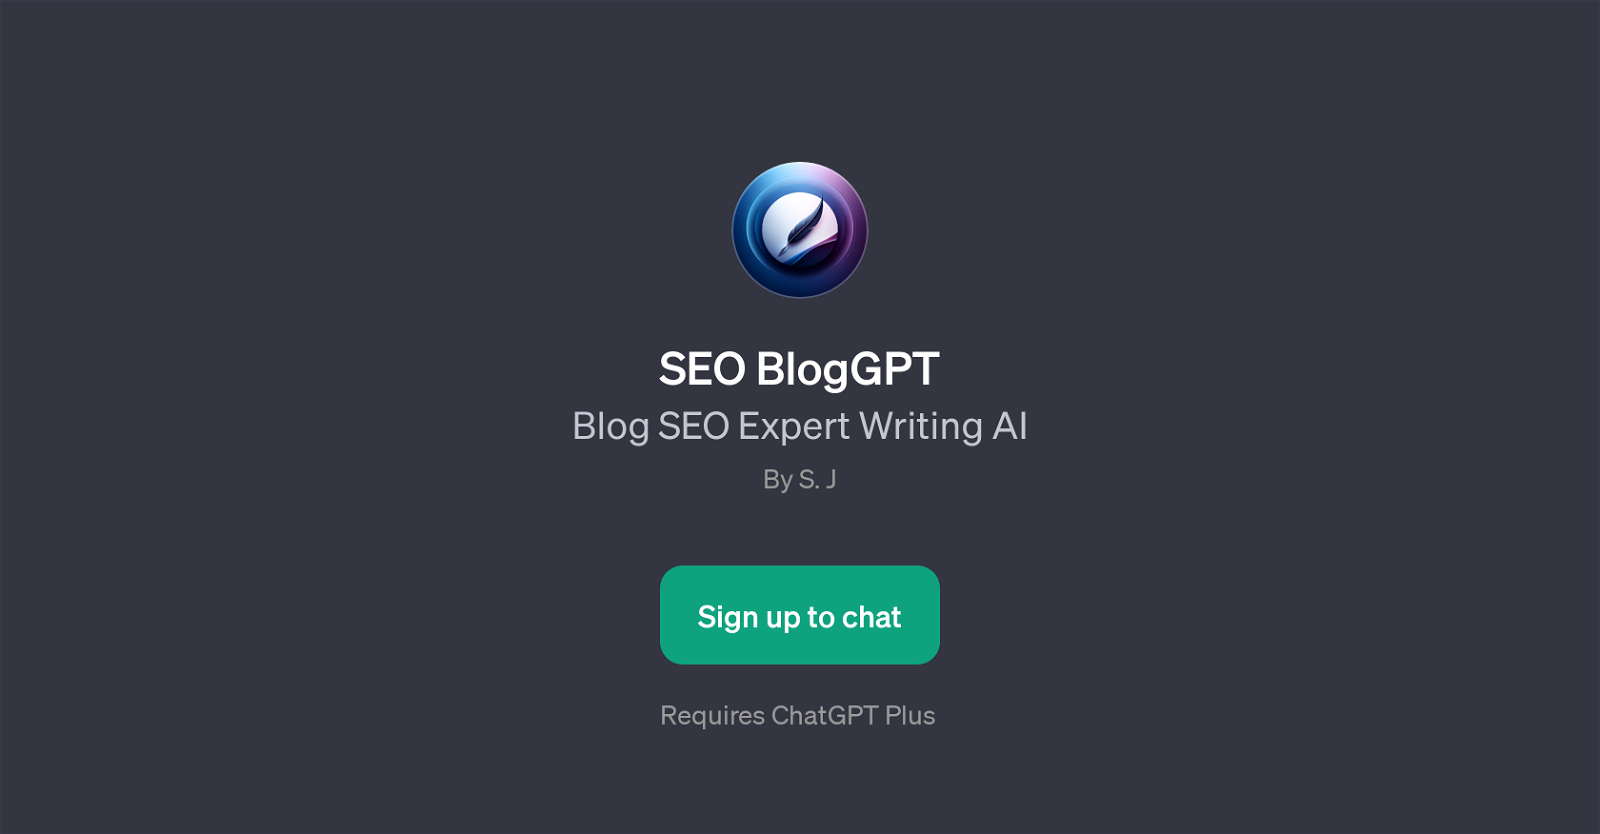 SEO BlogGPT website